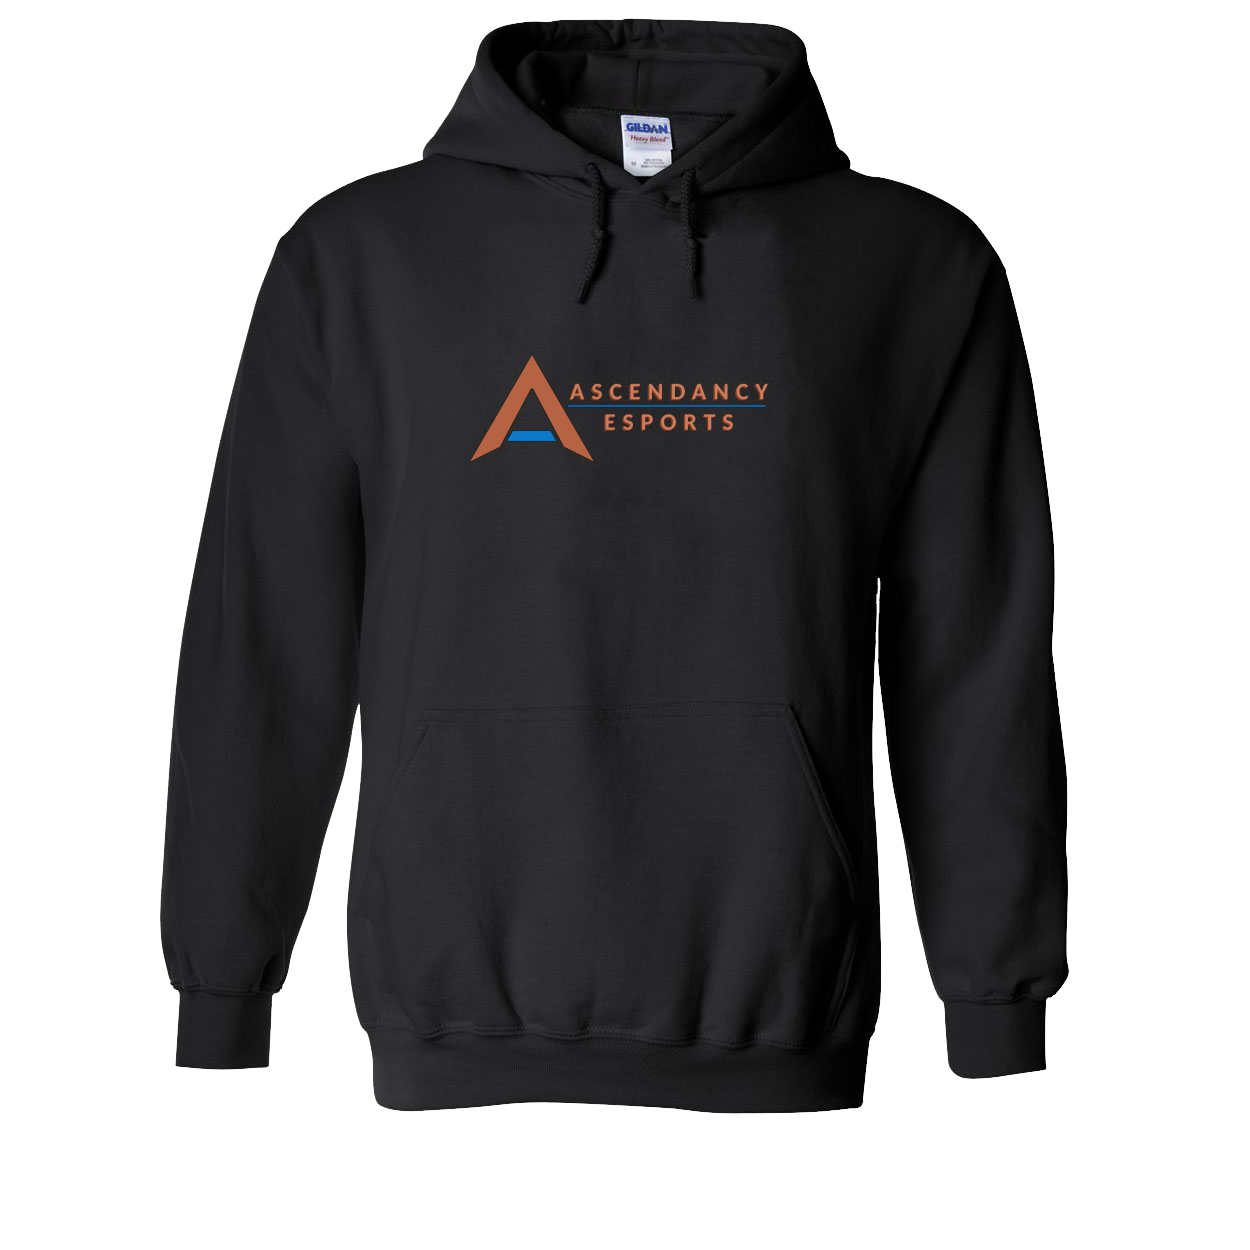 Ascendancy Esports Classic Sweatshirt Black